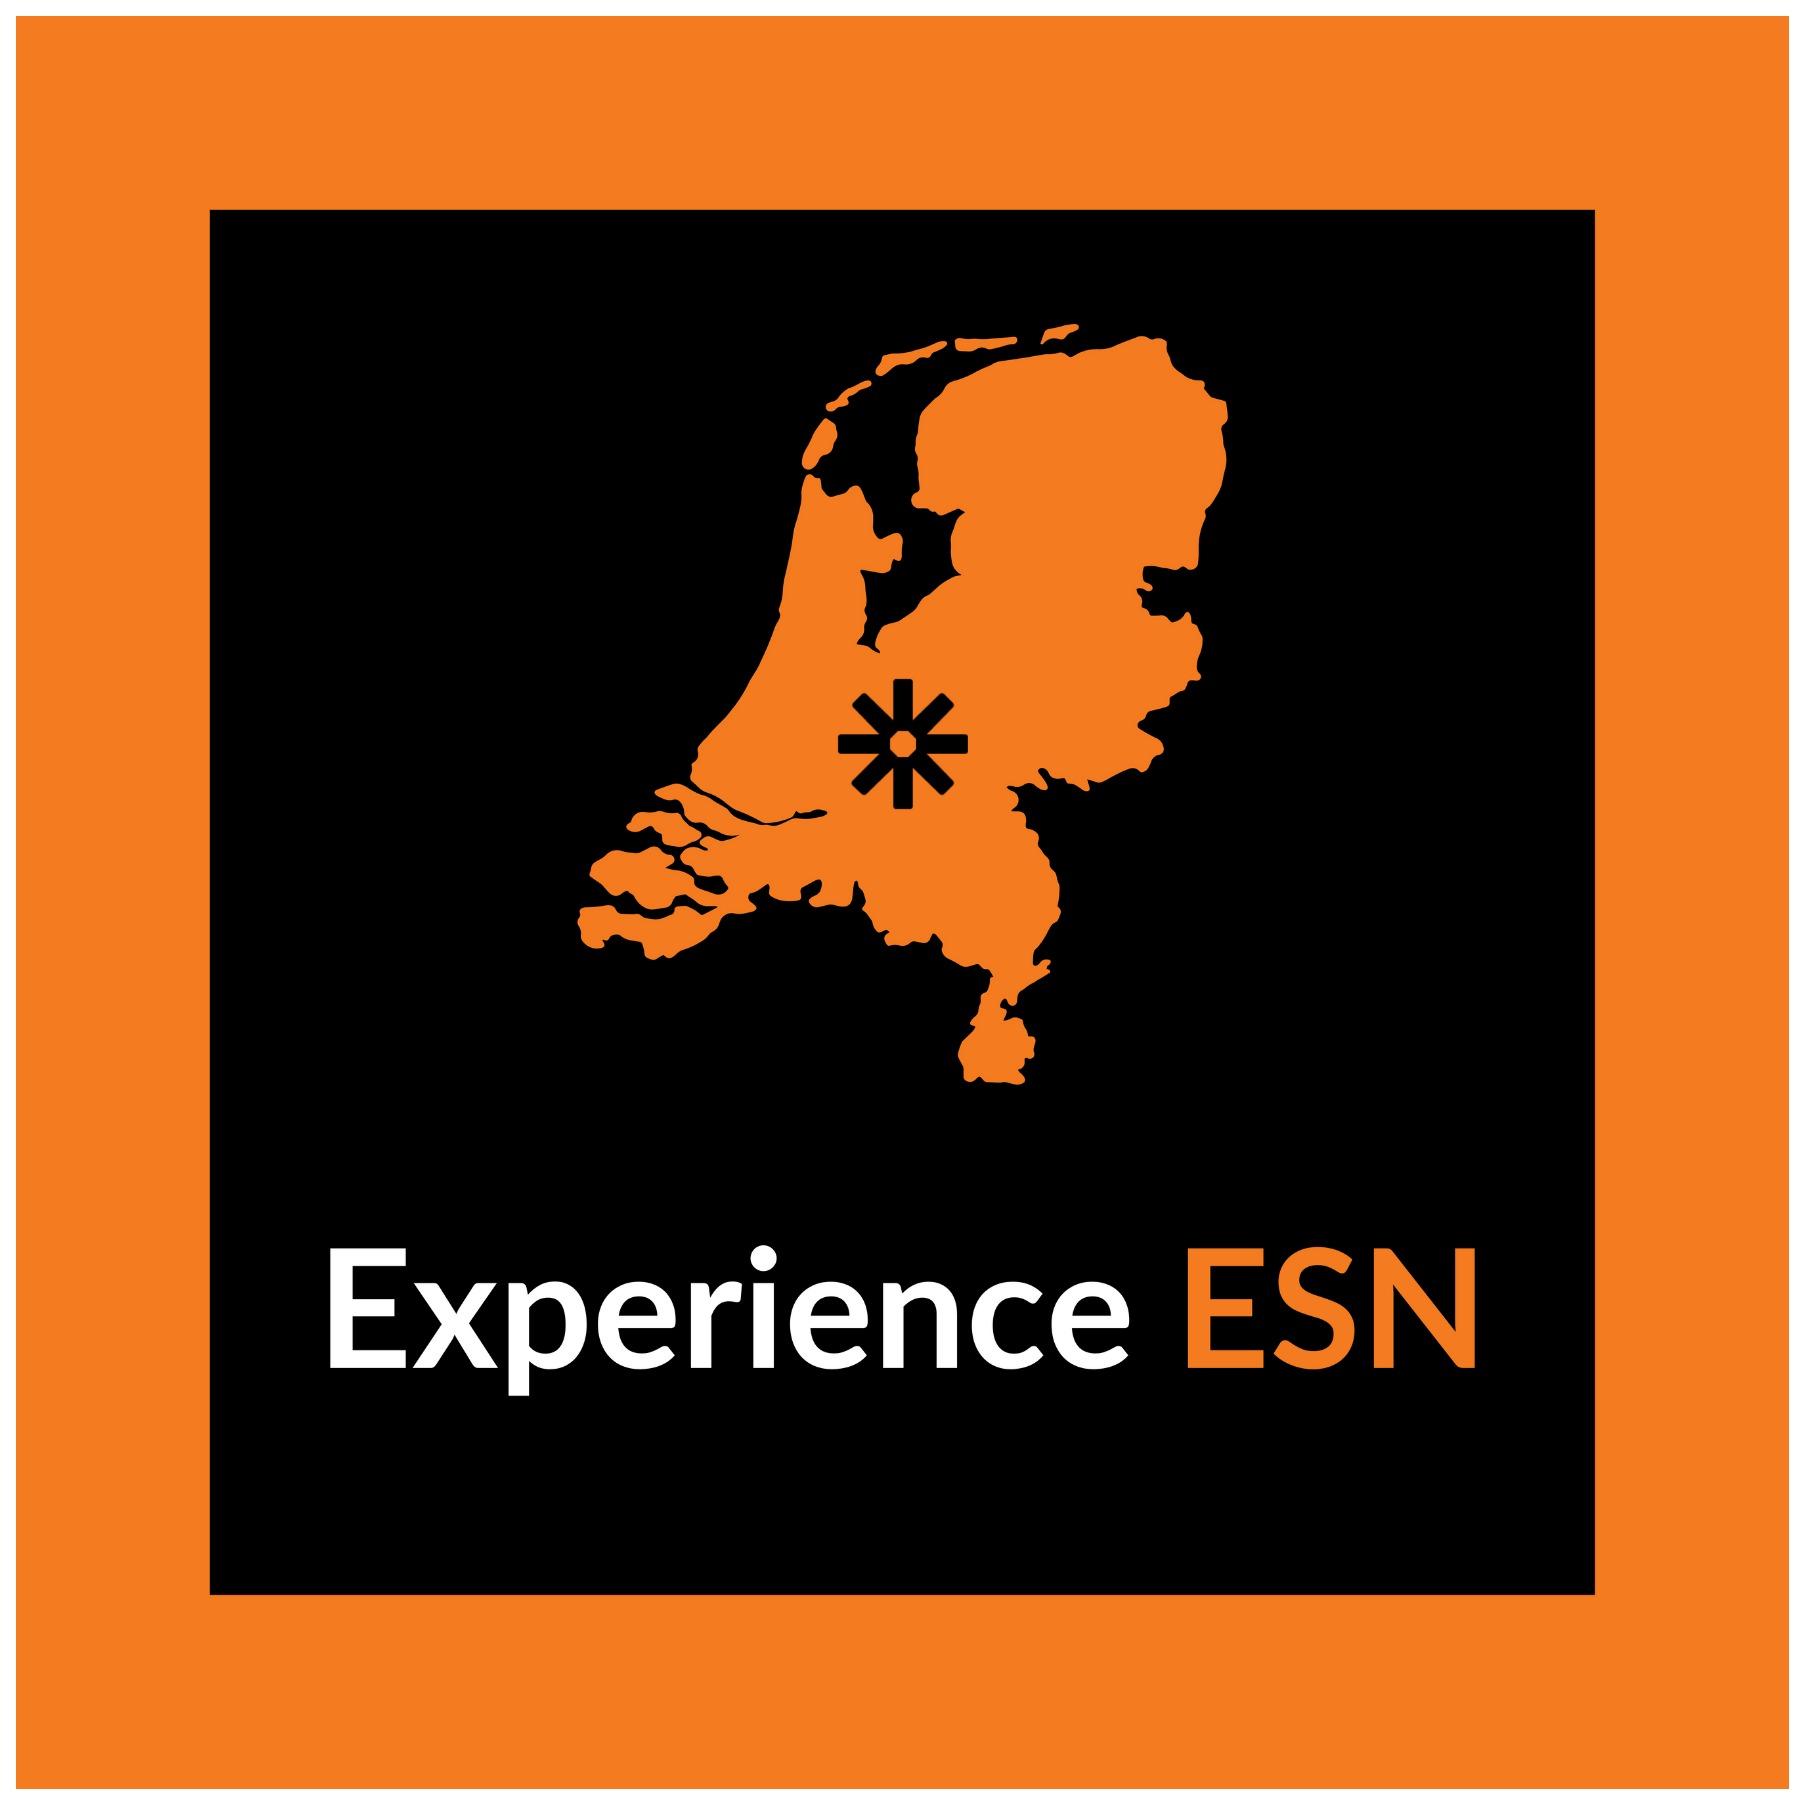 Experience ESN